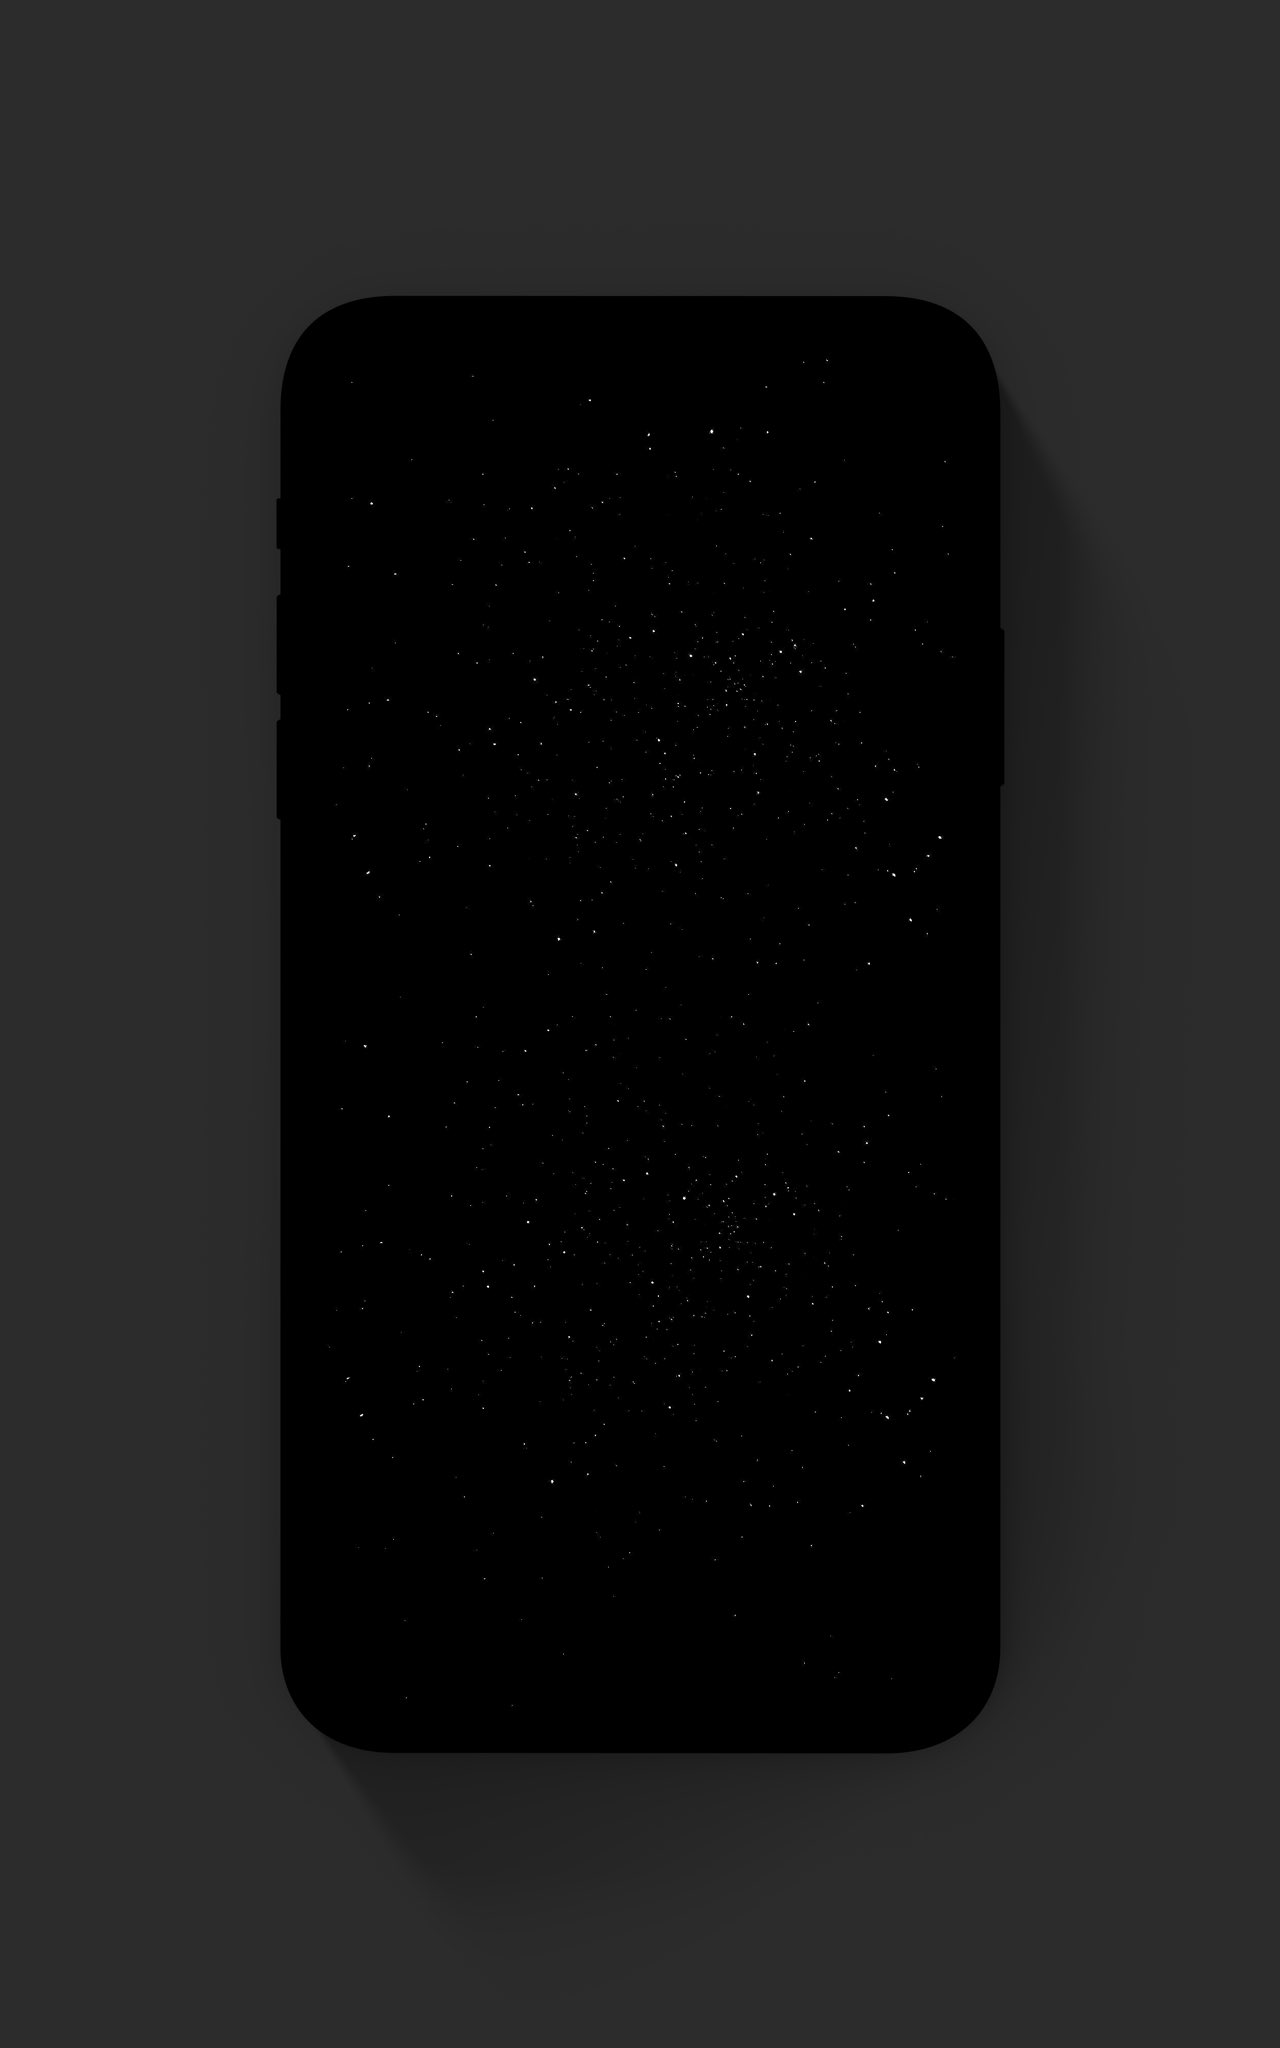 iphone 4 black wallpapers